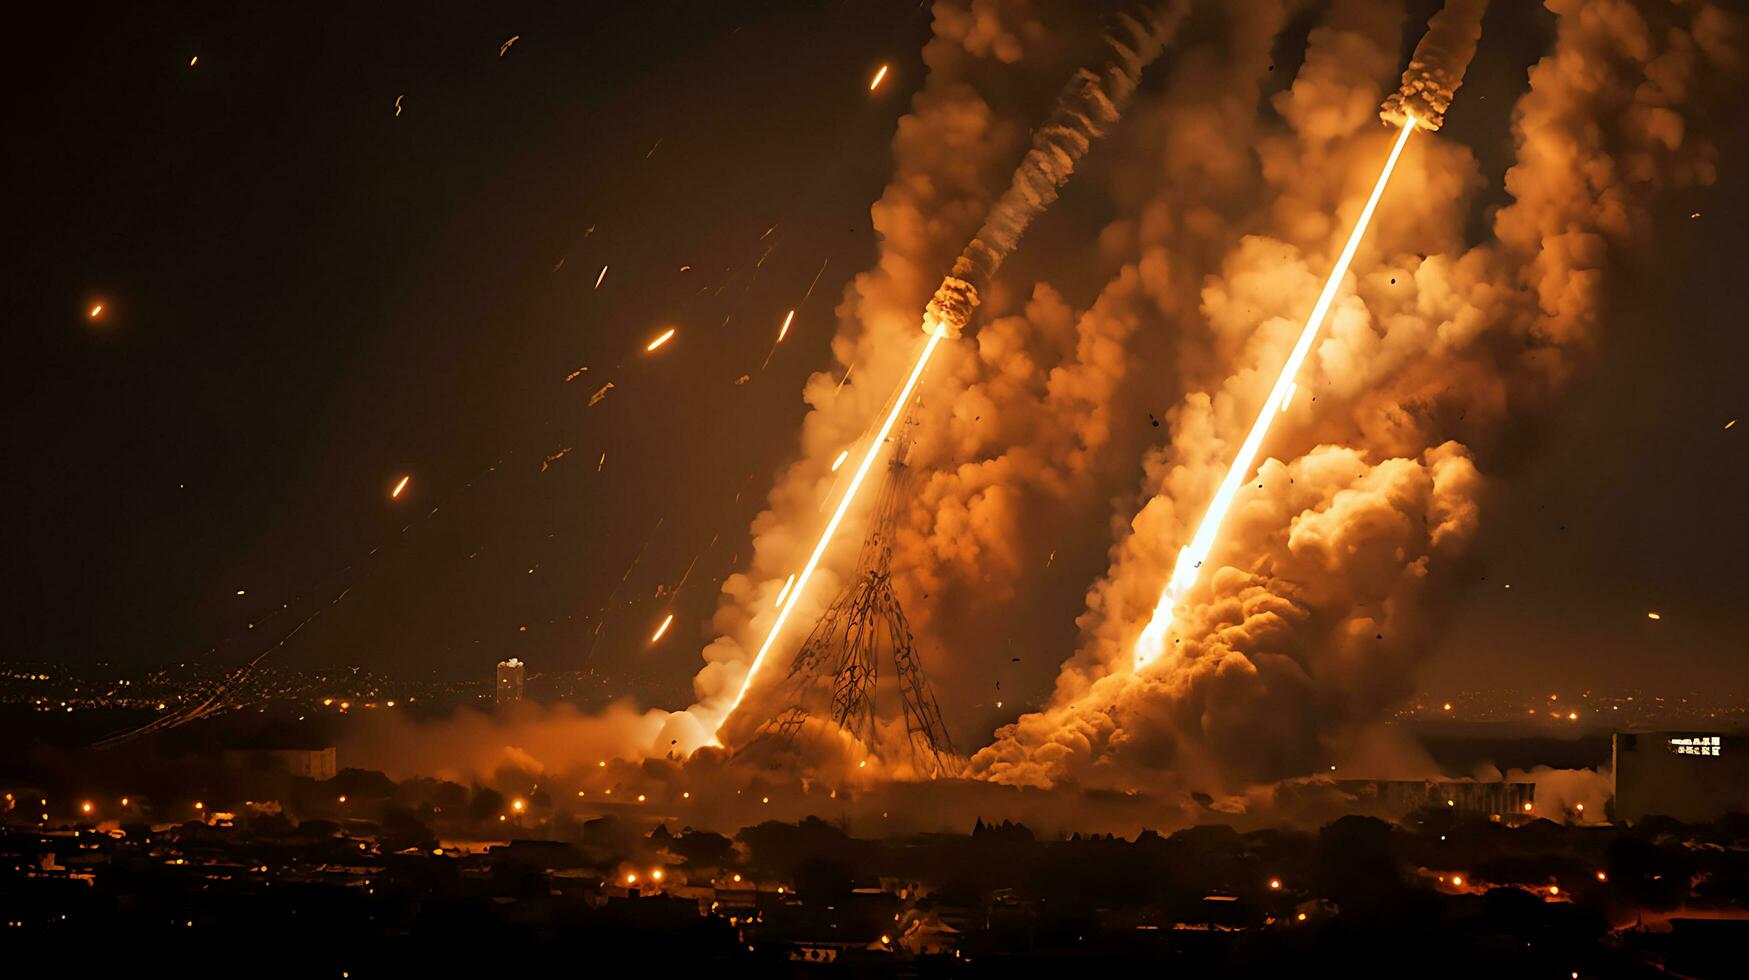 AI Generative Exploration missile rocket attack war background photo